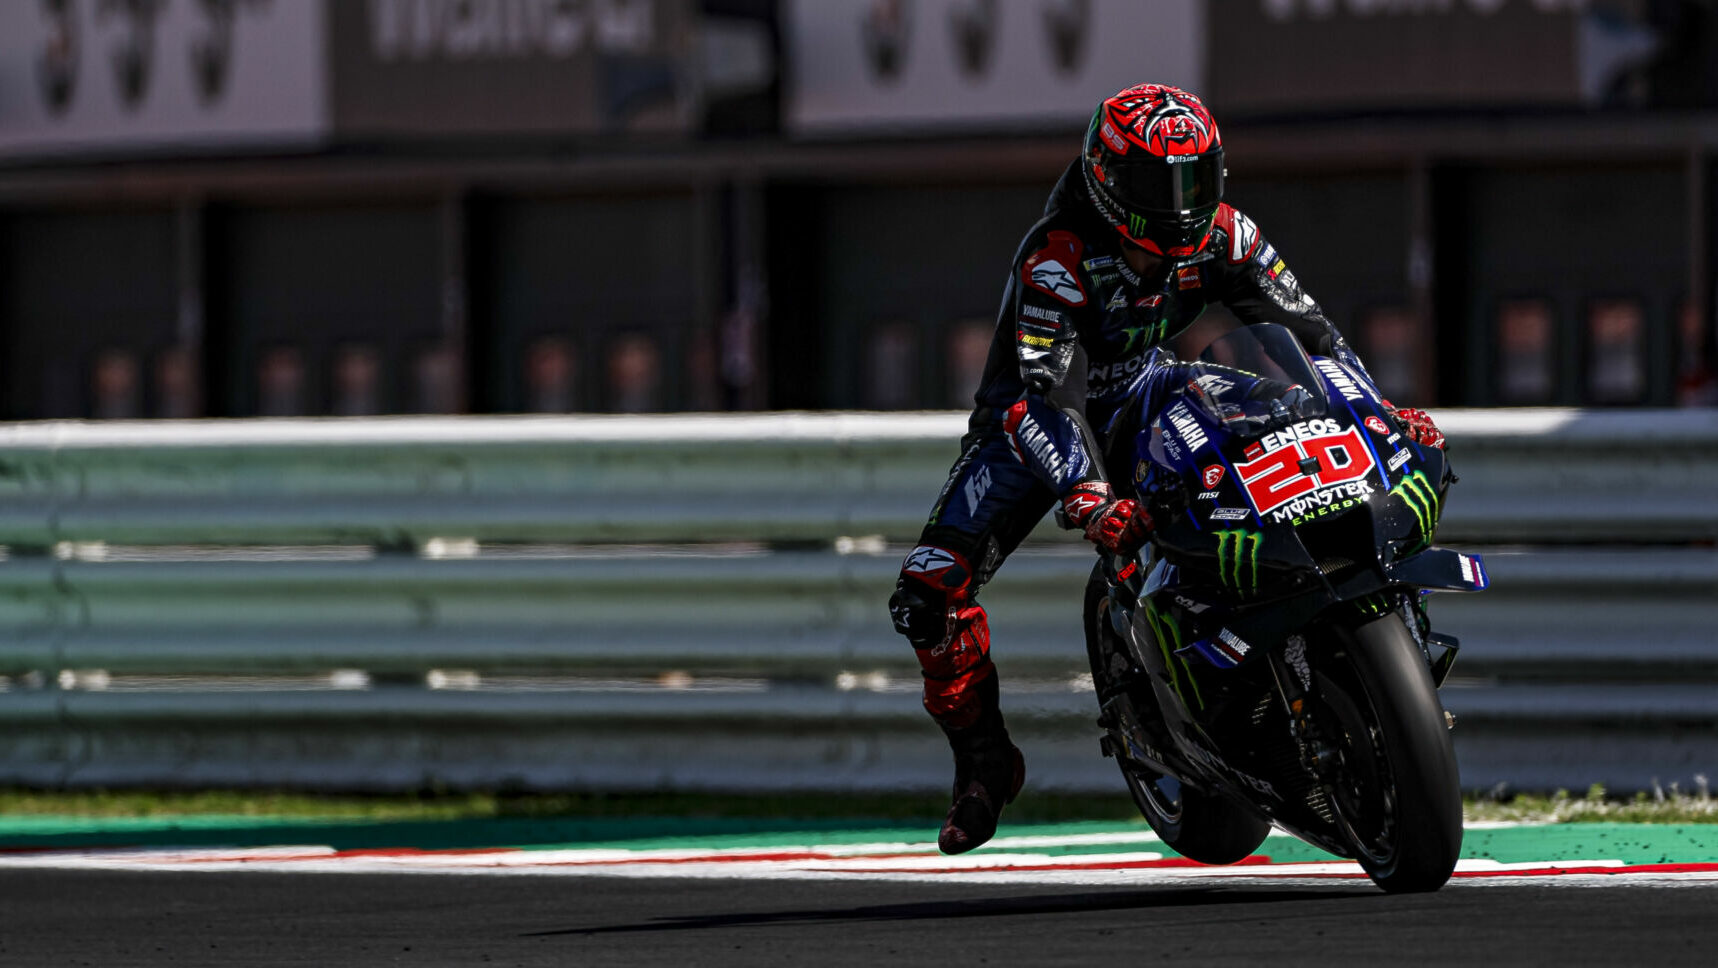 Fabio Quartararo calls on Yamaha to deliver next season - 'It's in